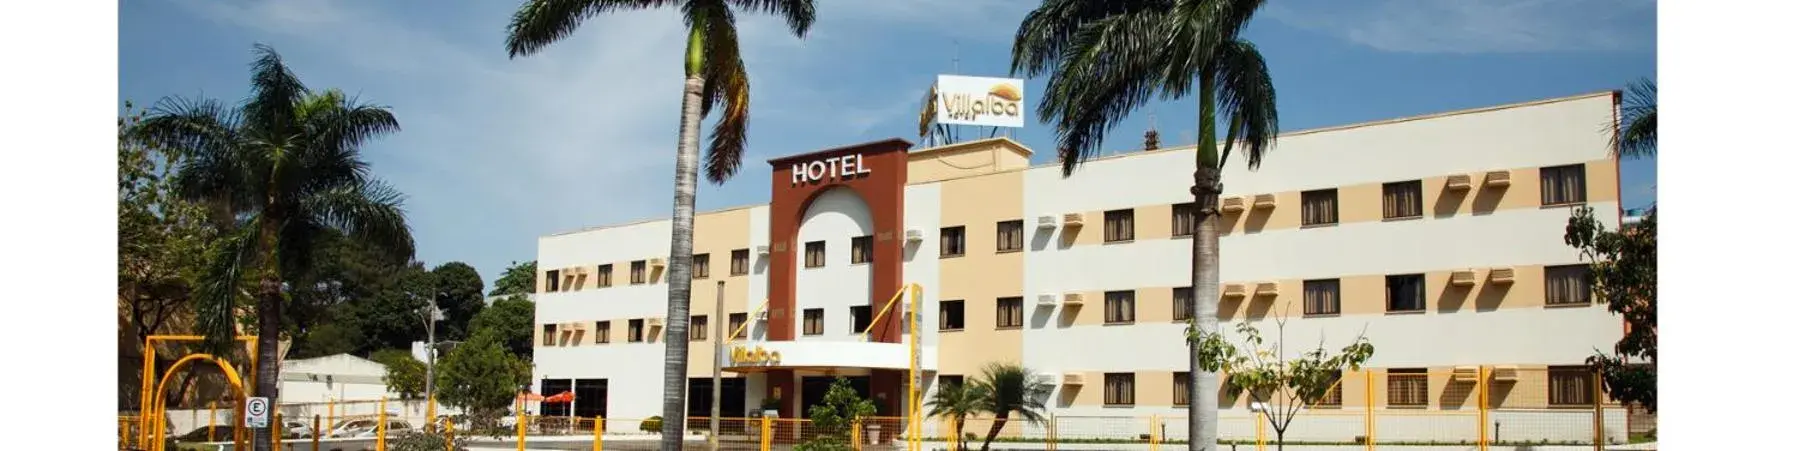 Property Building in Villalba Hotel